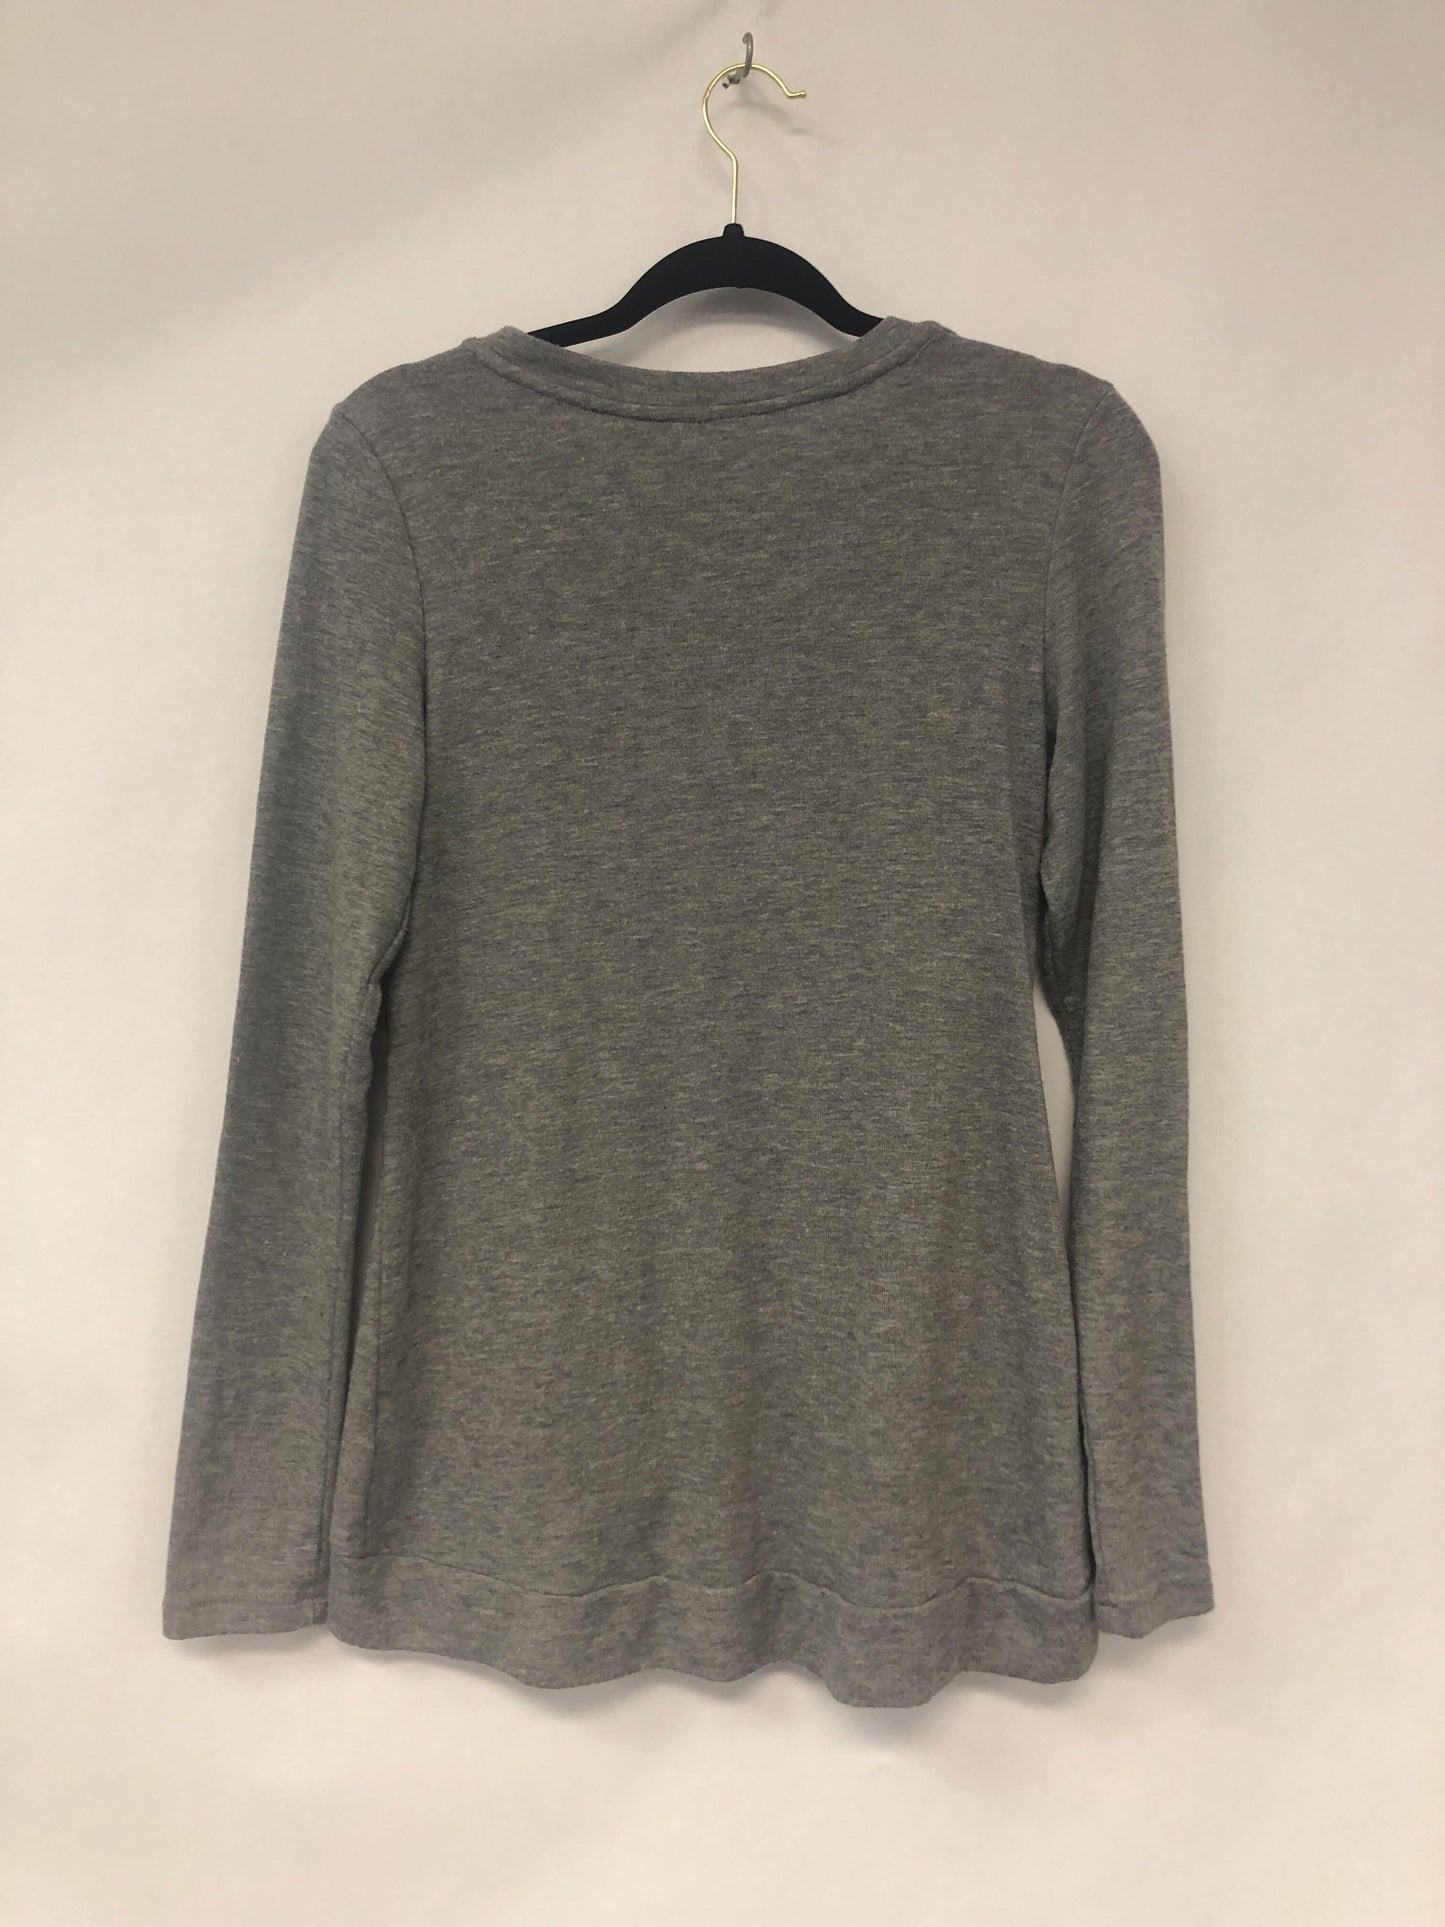 Outlet 6220 - Latched Mama Everyday Nursing Sweater - Heathered Grey - Medium